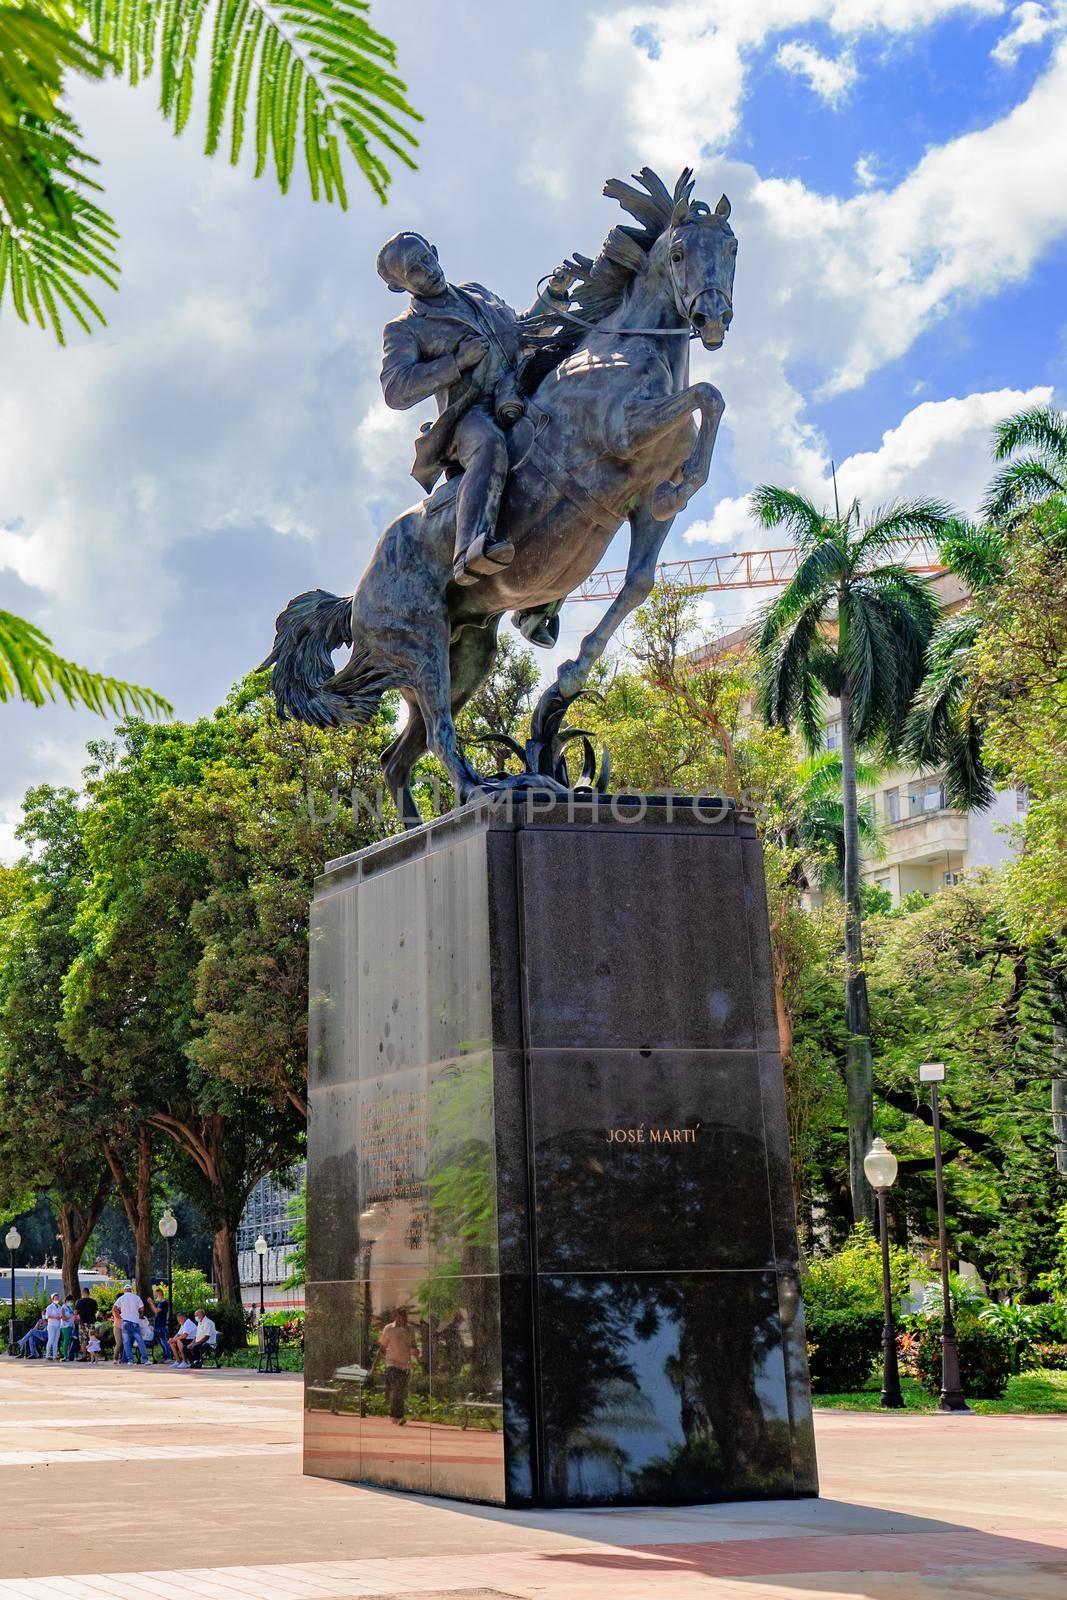 Havana Cuba. November 25, 2020: View of the statue of Jose Marti on his horse, in the Plaza 13 de Marzo